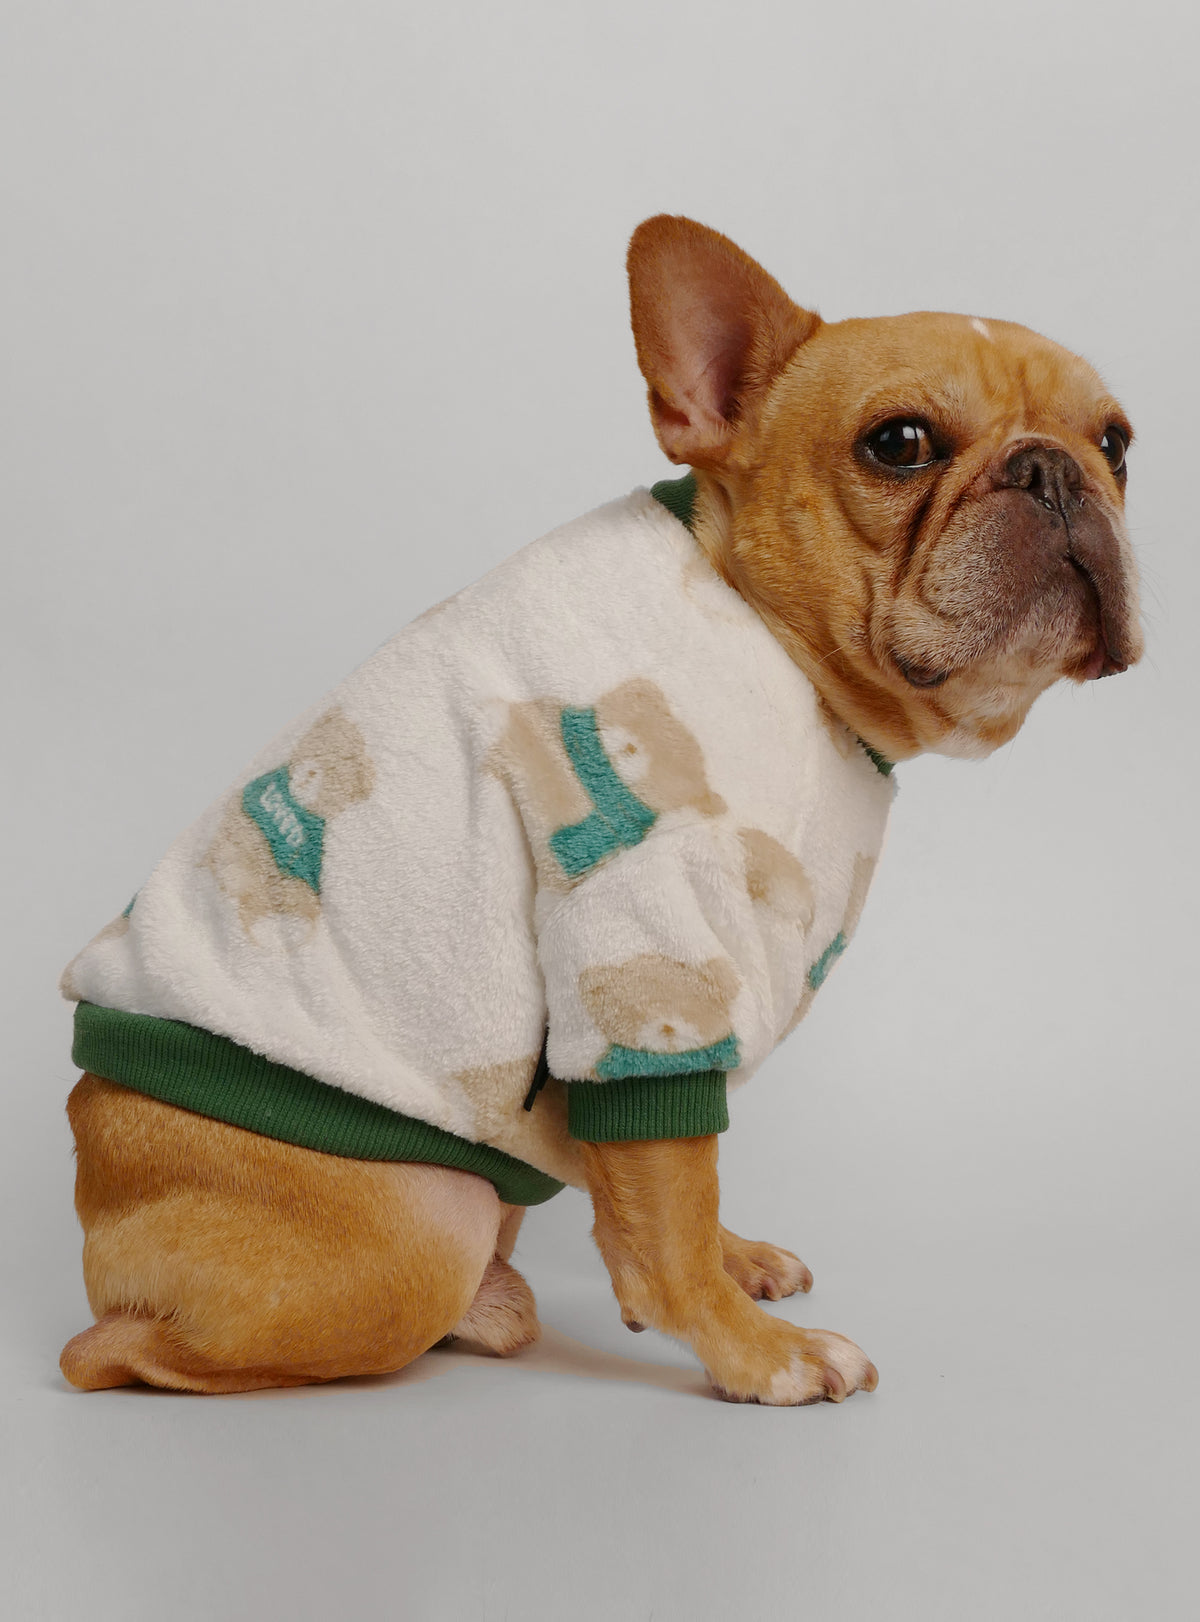 The Teddy Dog Sweater